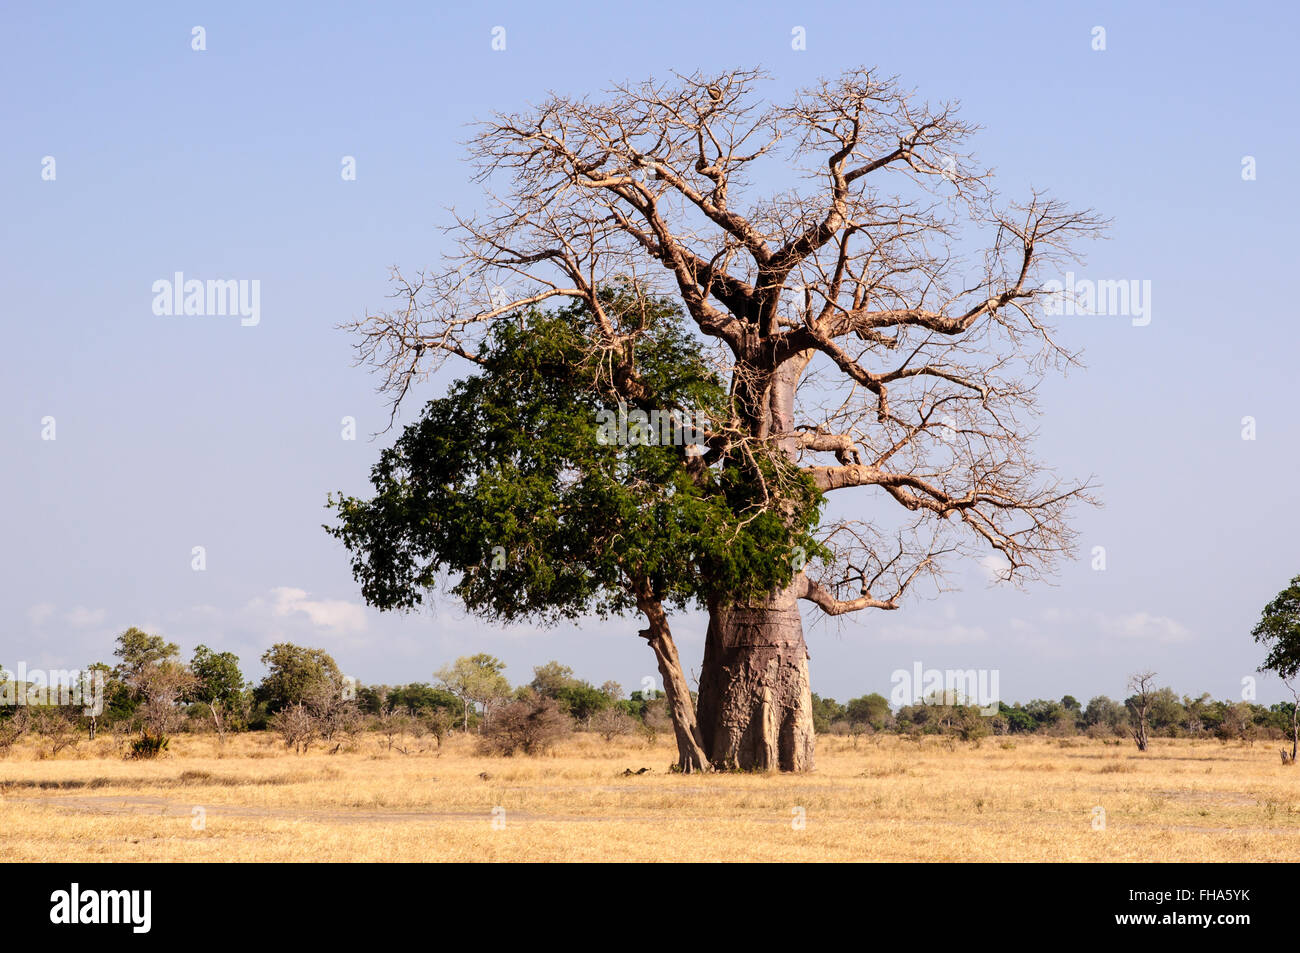 Baobab tree in an African safari landscape Stock Photo